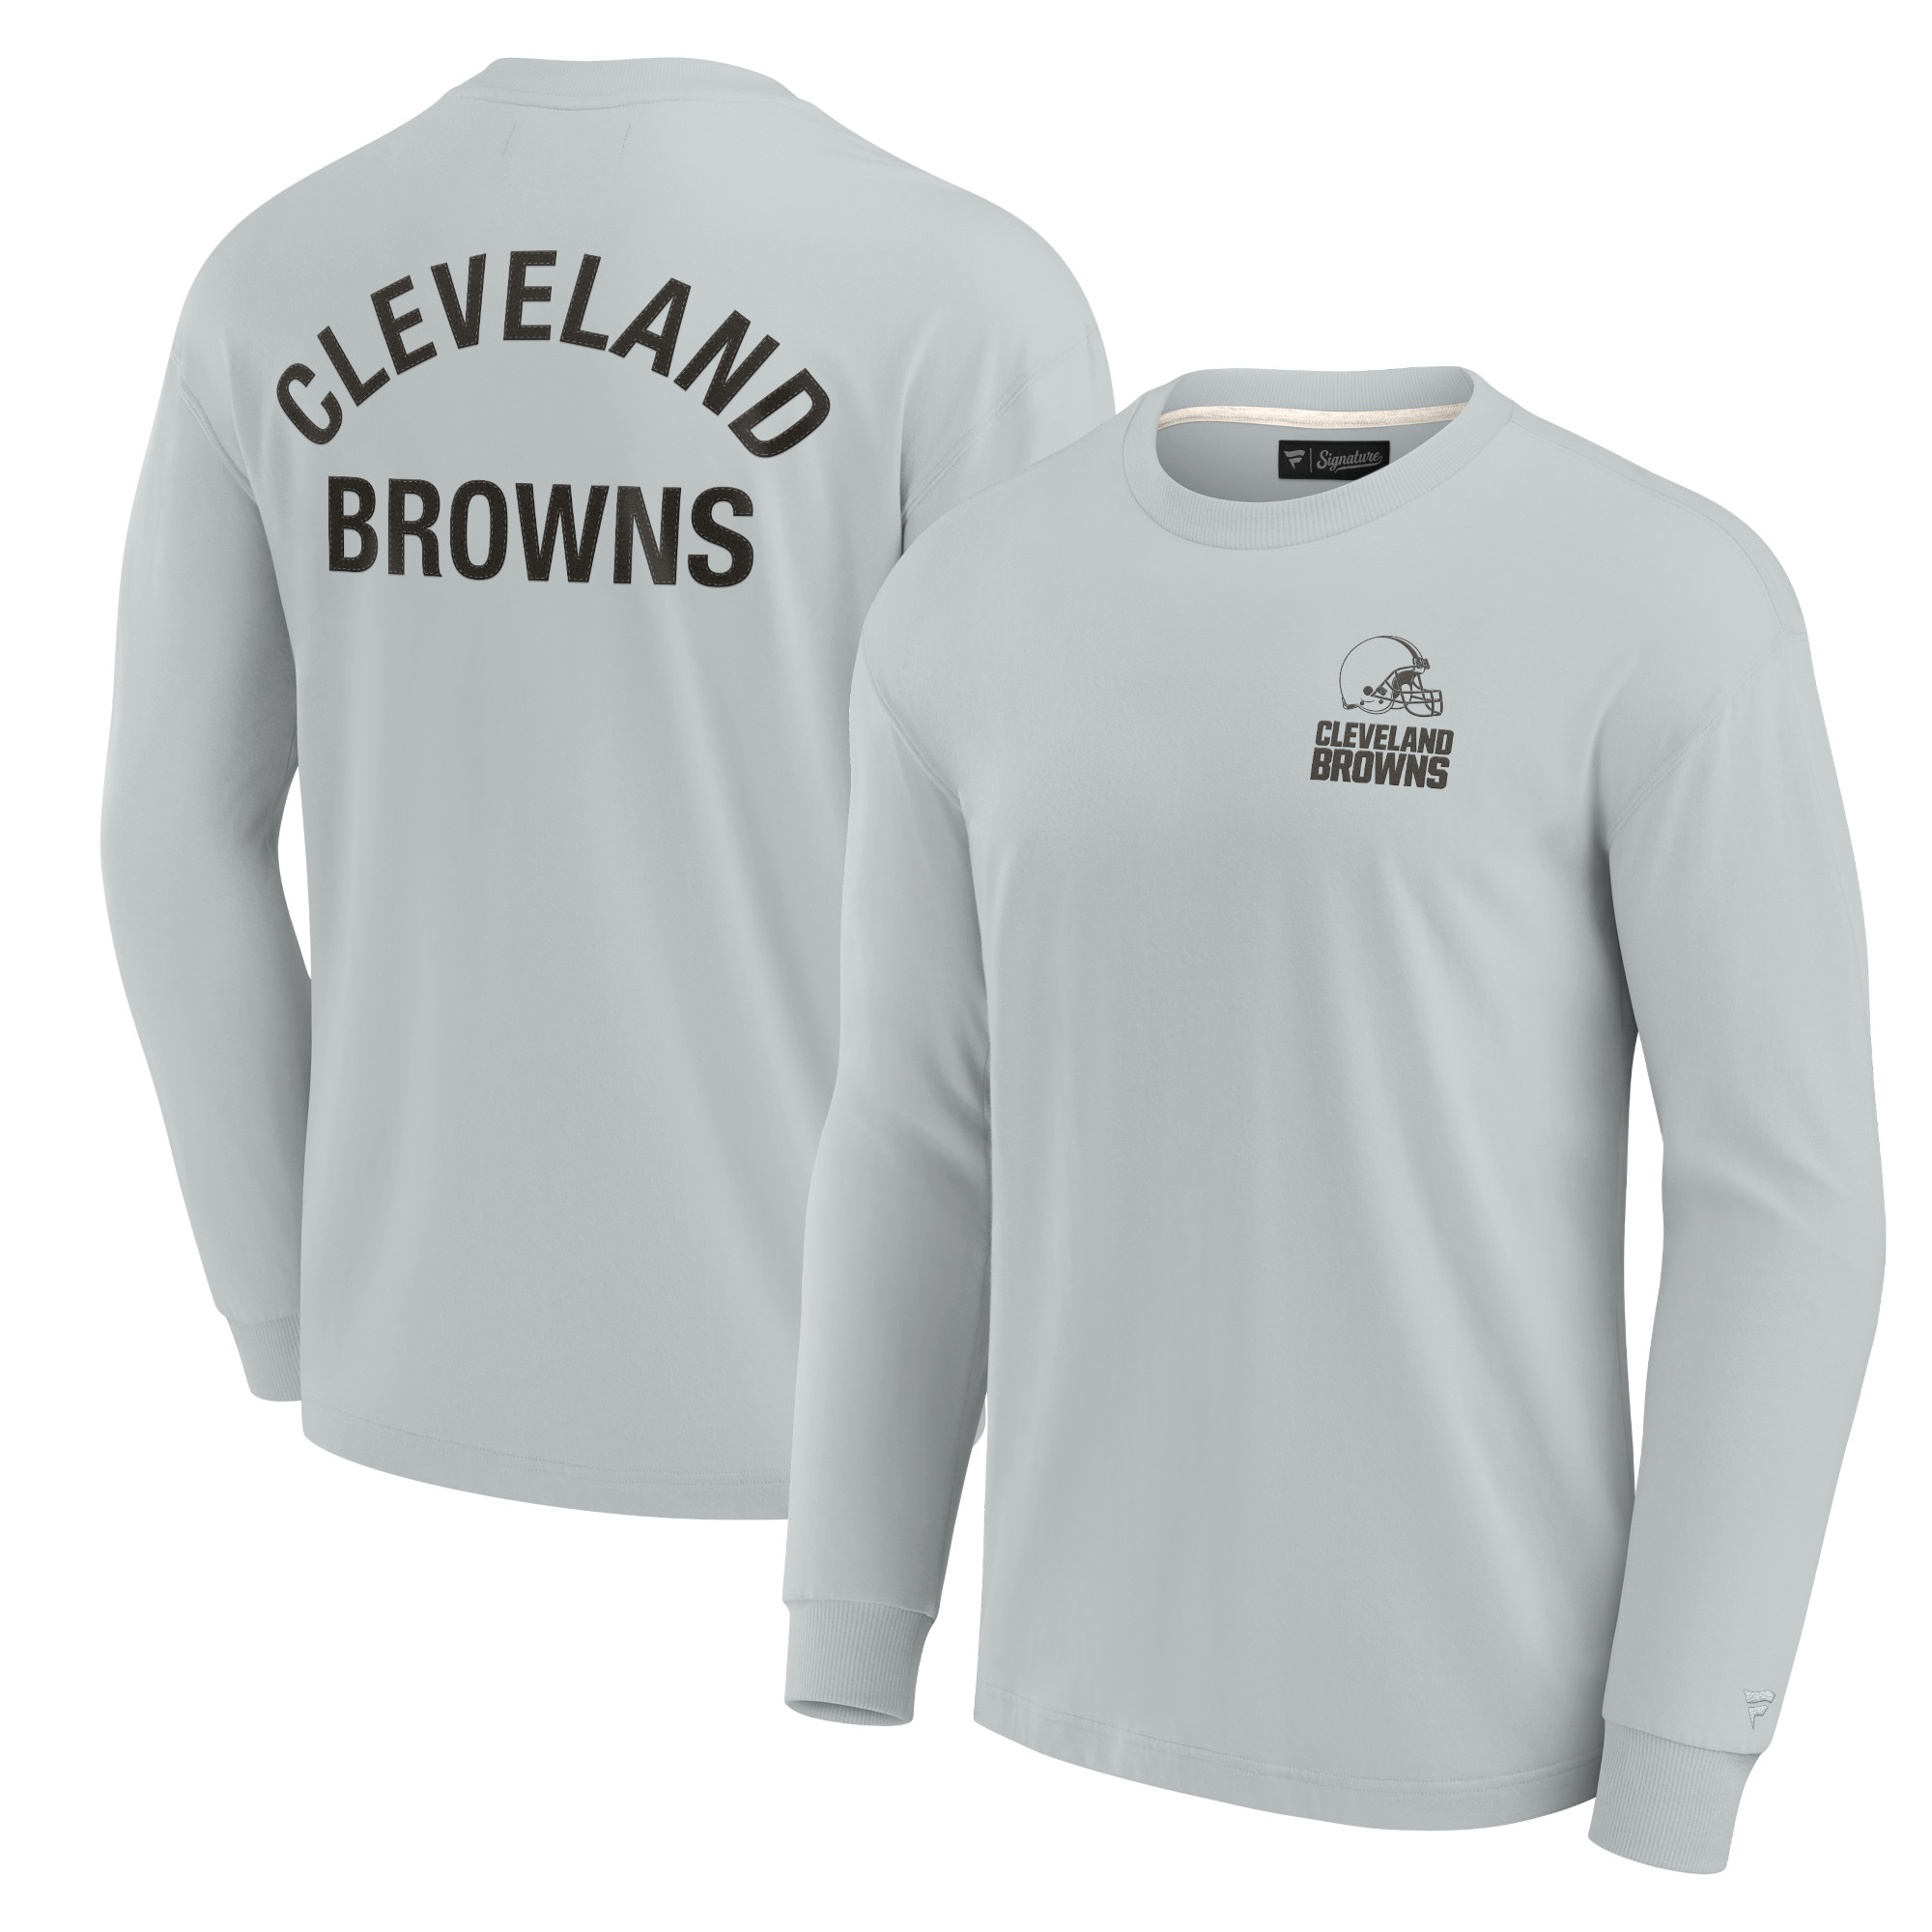 Unisex Fanatics Graues Cleveland Browns Elements Superweiches Langarm-T-Shirt